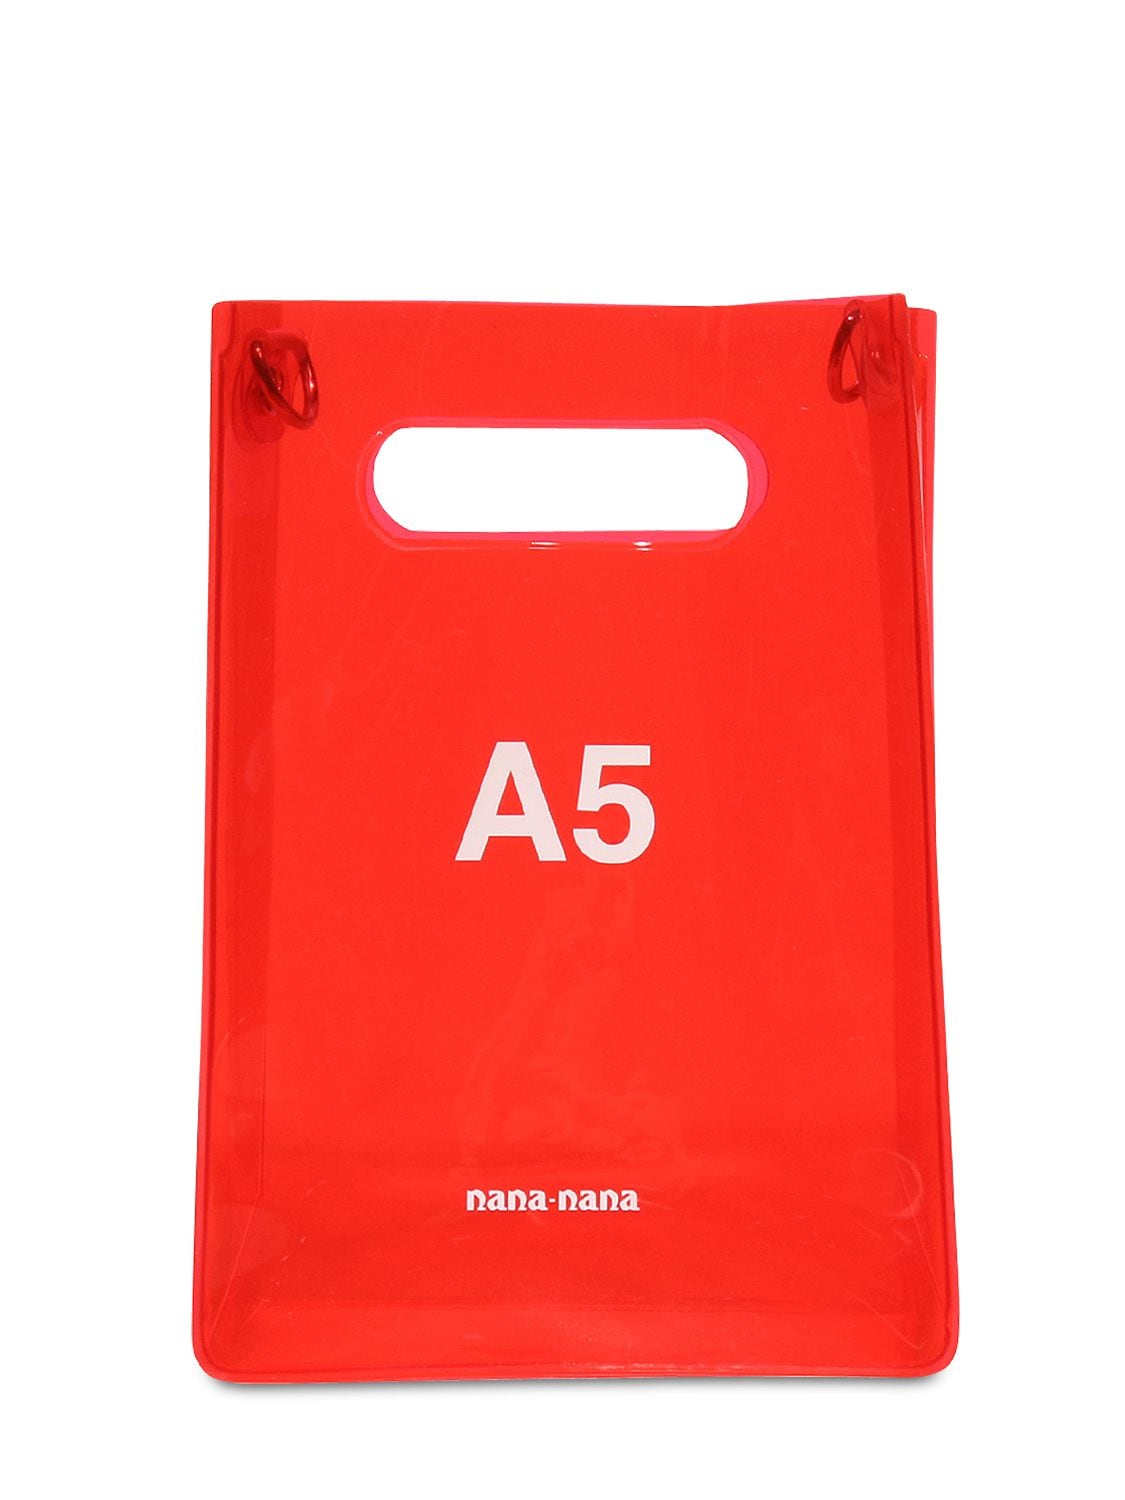 Nana-nana A5 Pvc Shopping Bag In Red